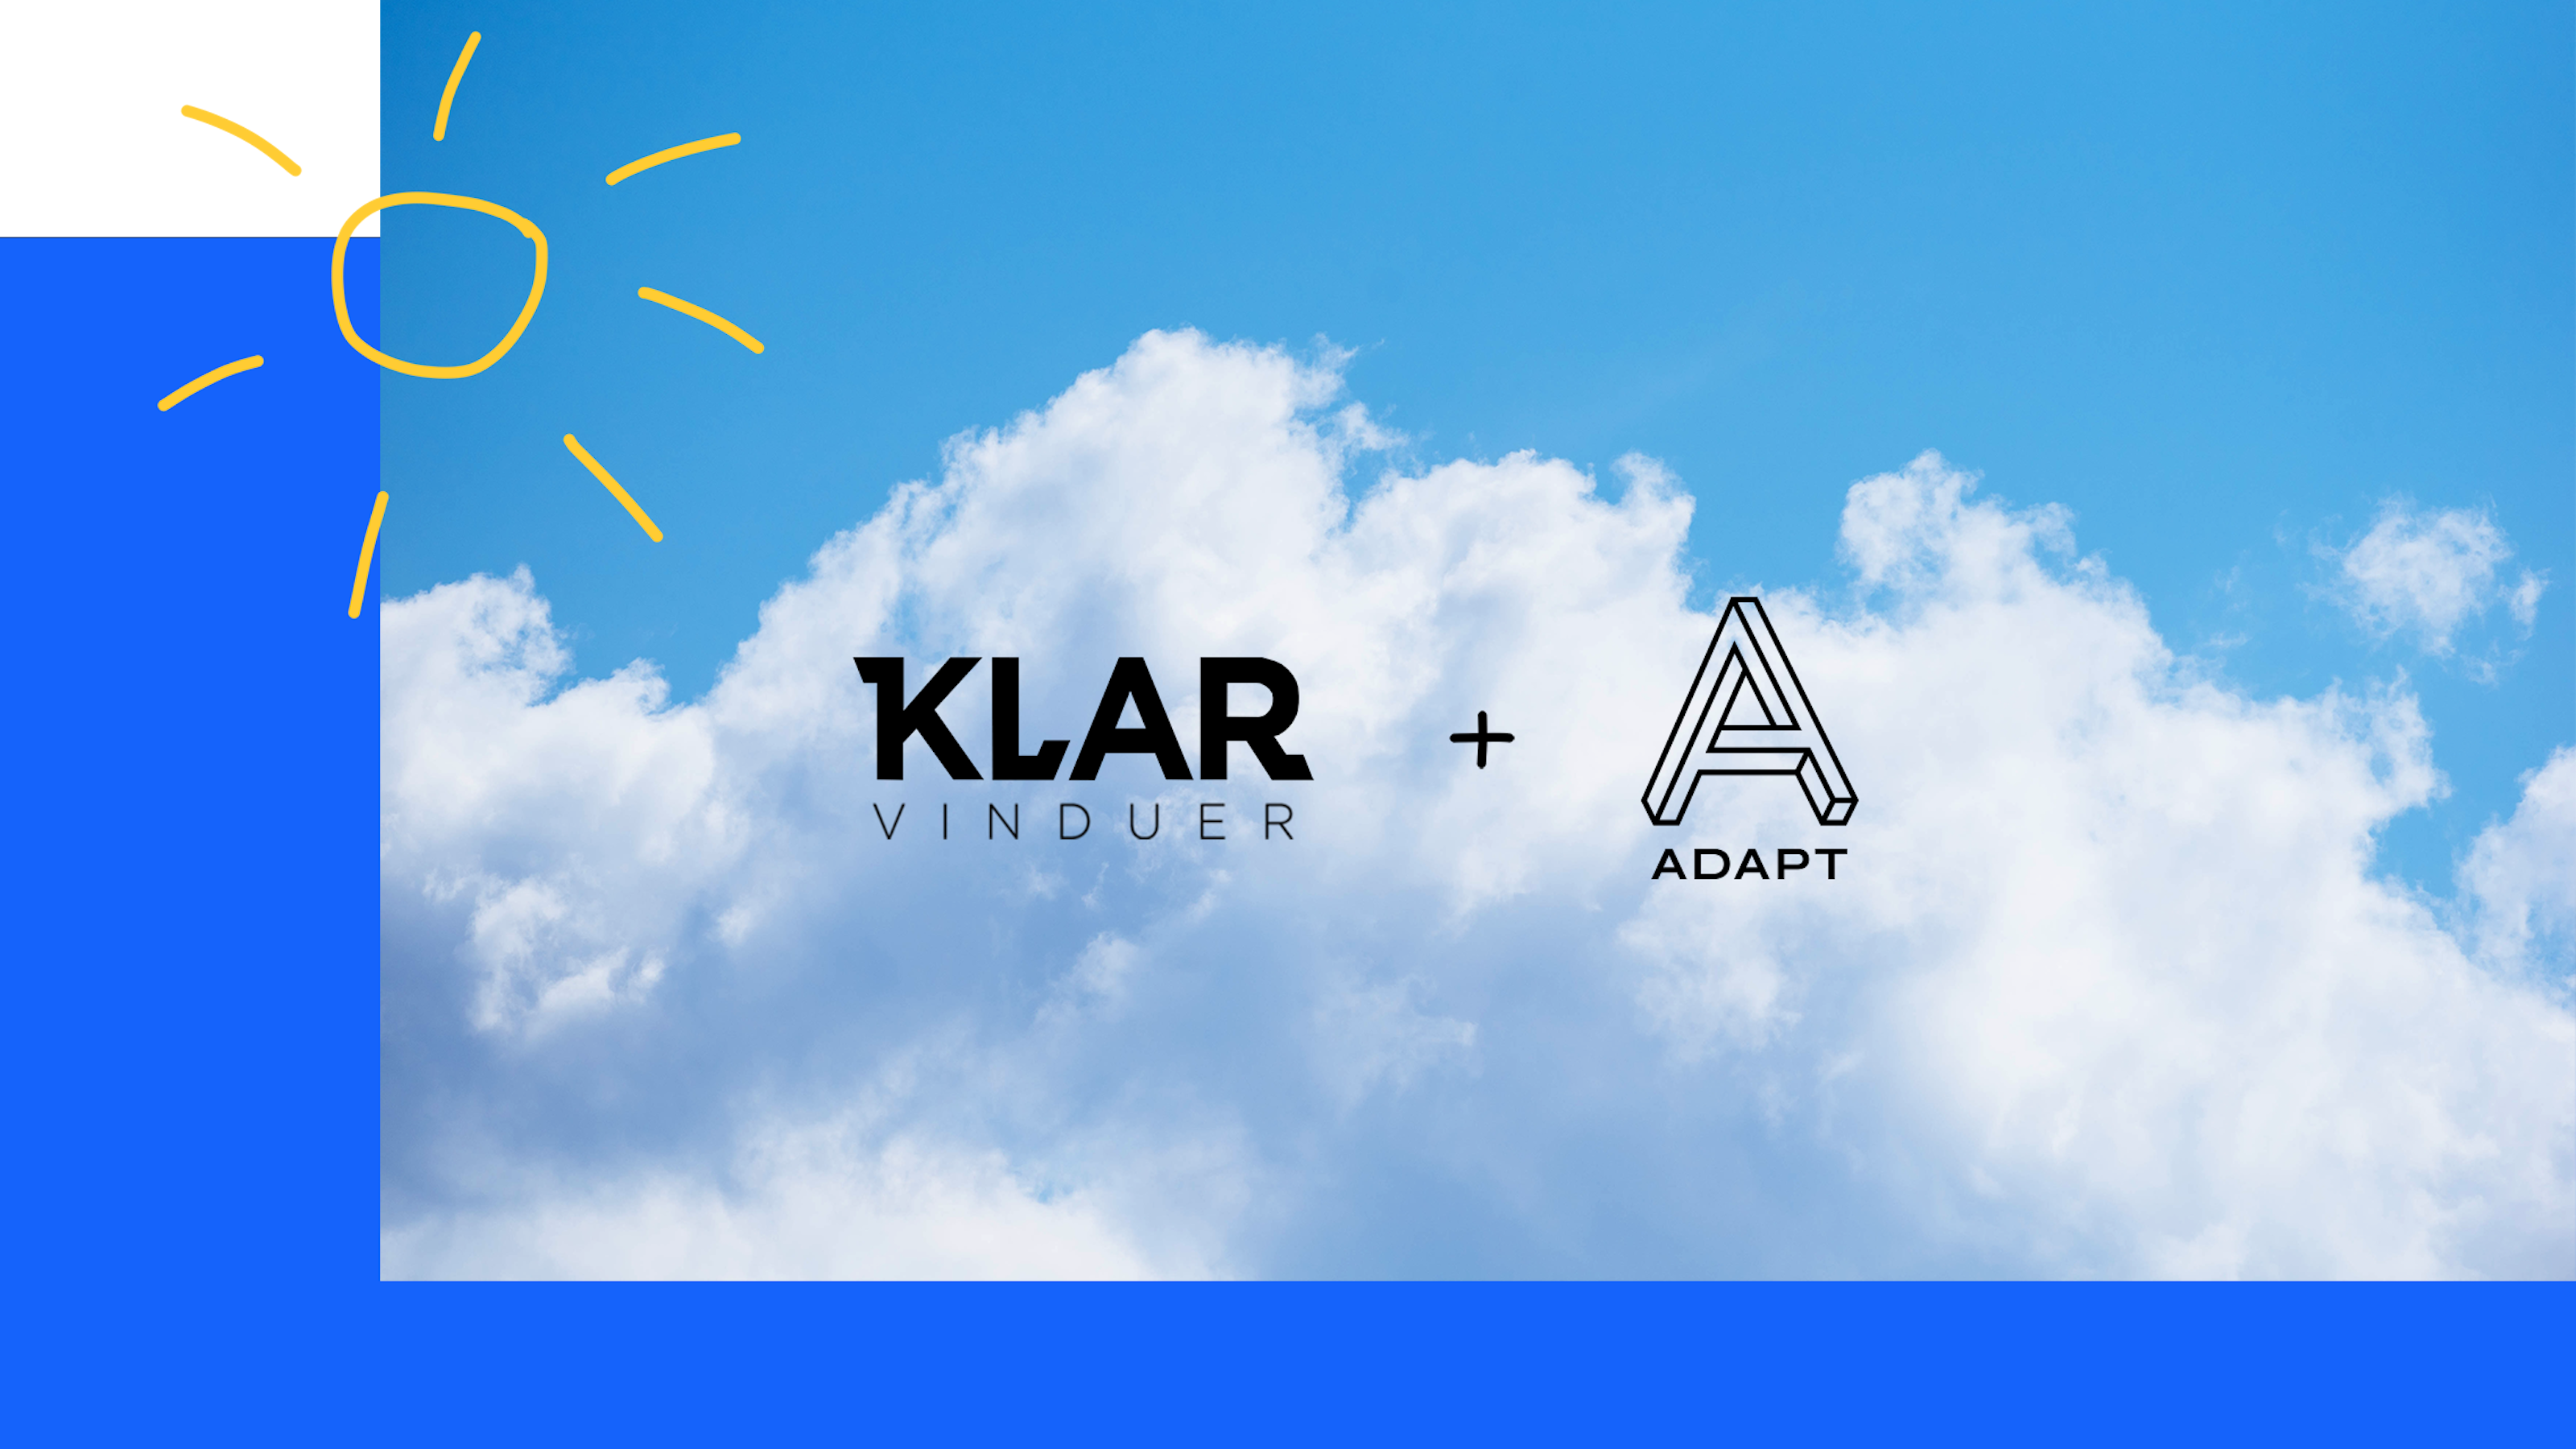 Klarvinduer chooses Adapt as digital partner featured image